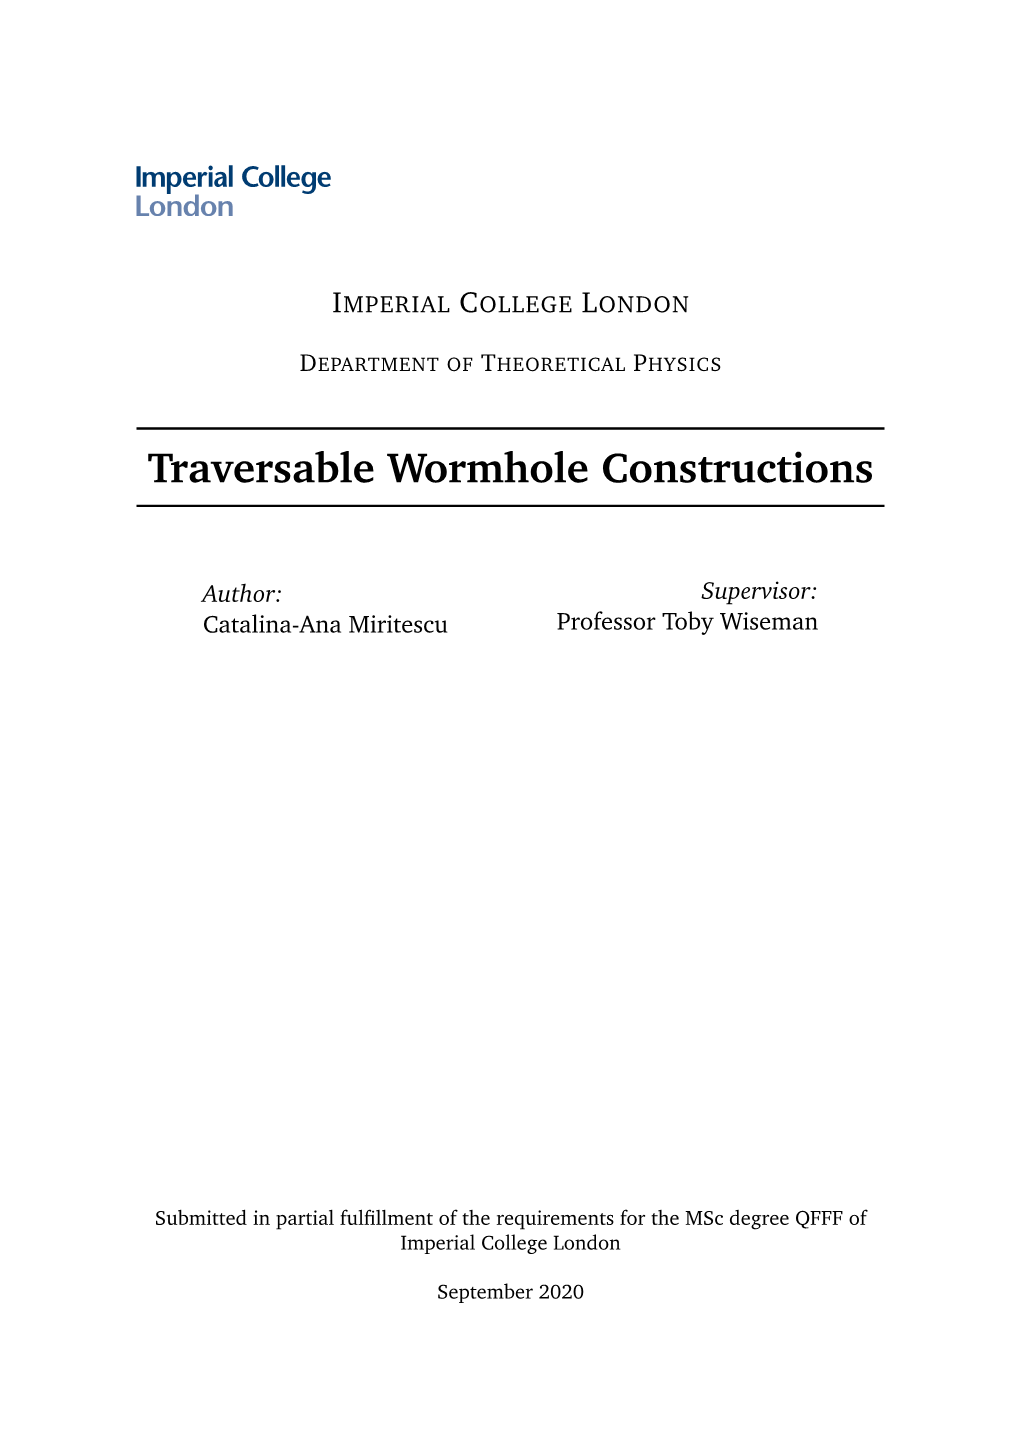 Traversable Wormhole Constructions